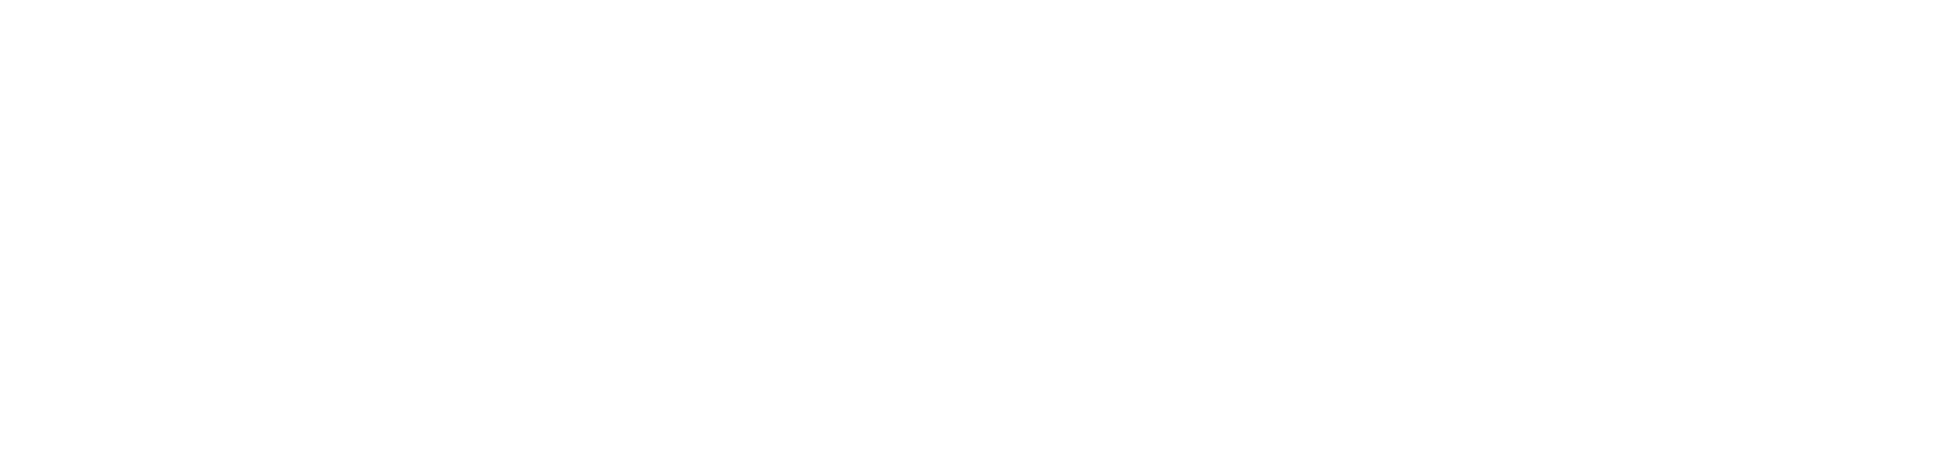 kimberly sunstrum logo